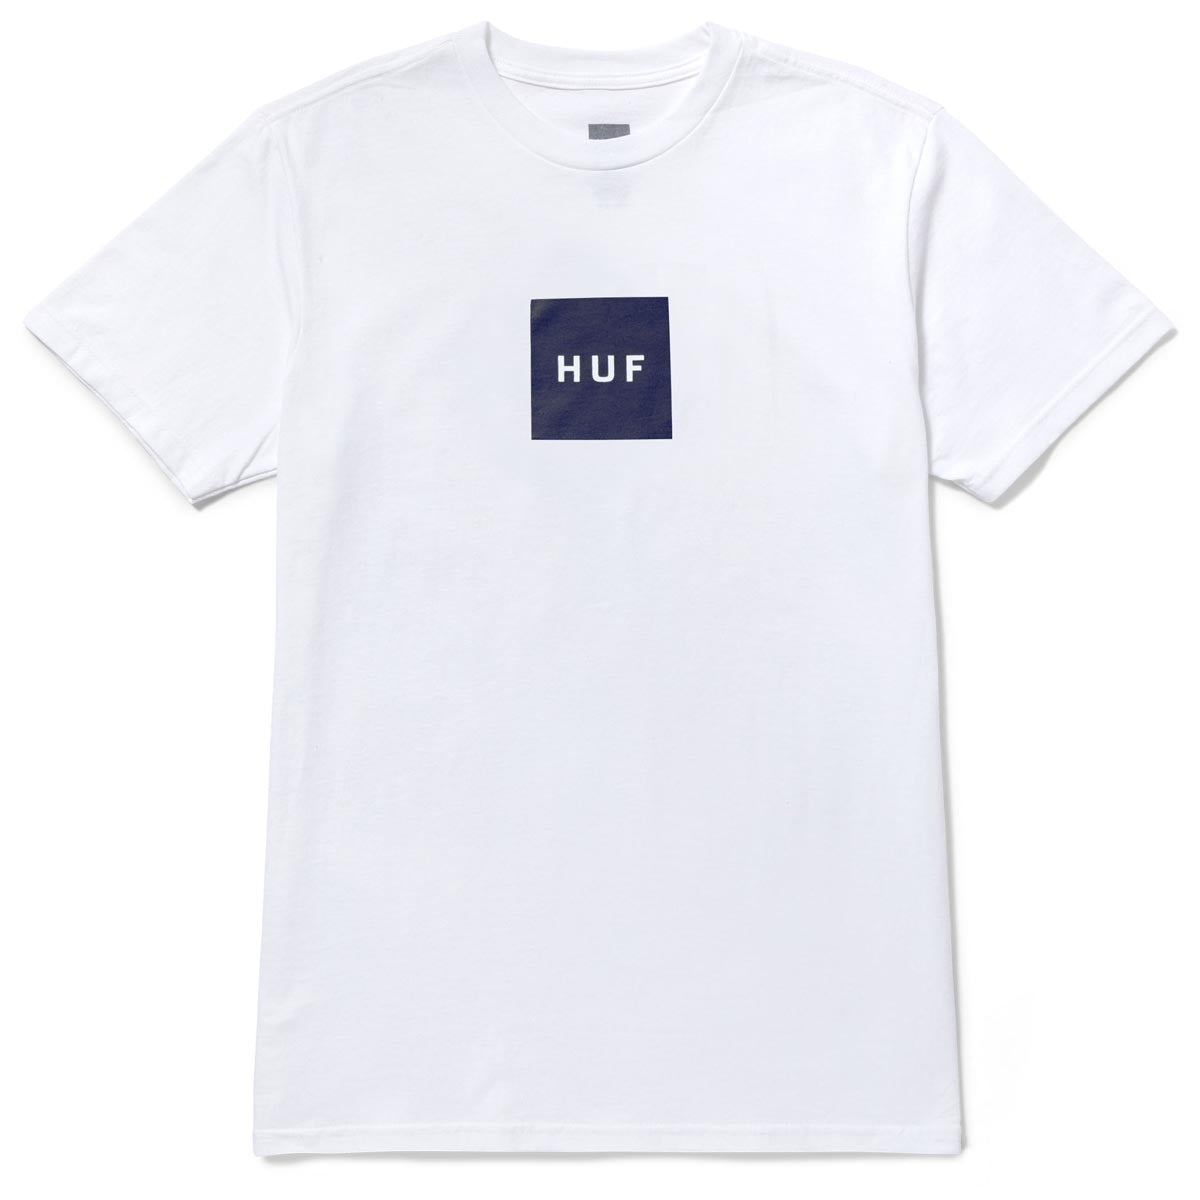 HUF Set Box T-Shirt - White image 1